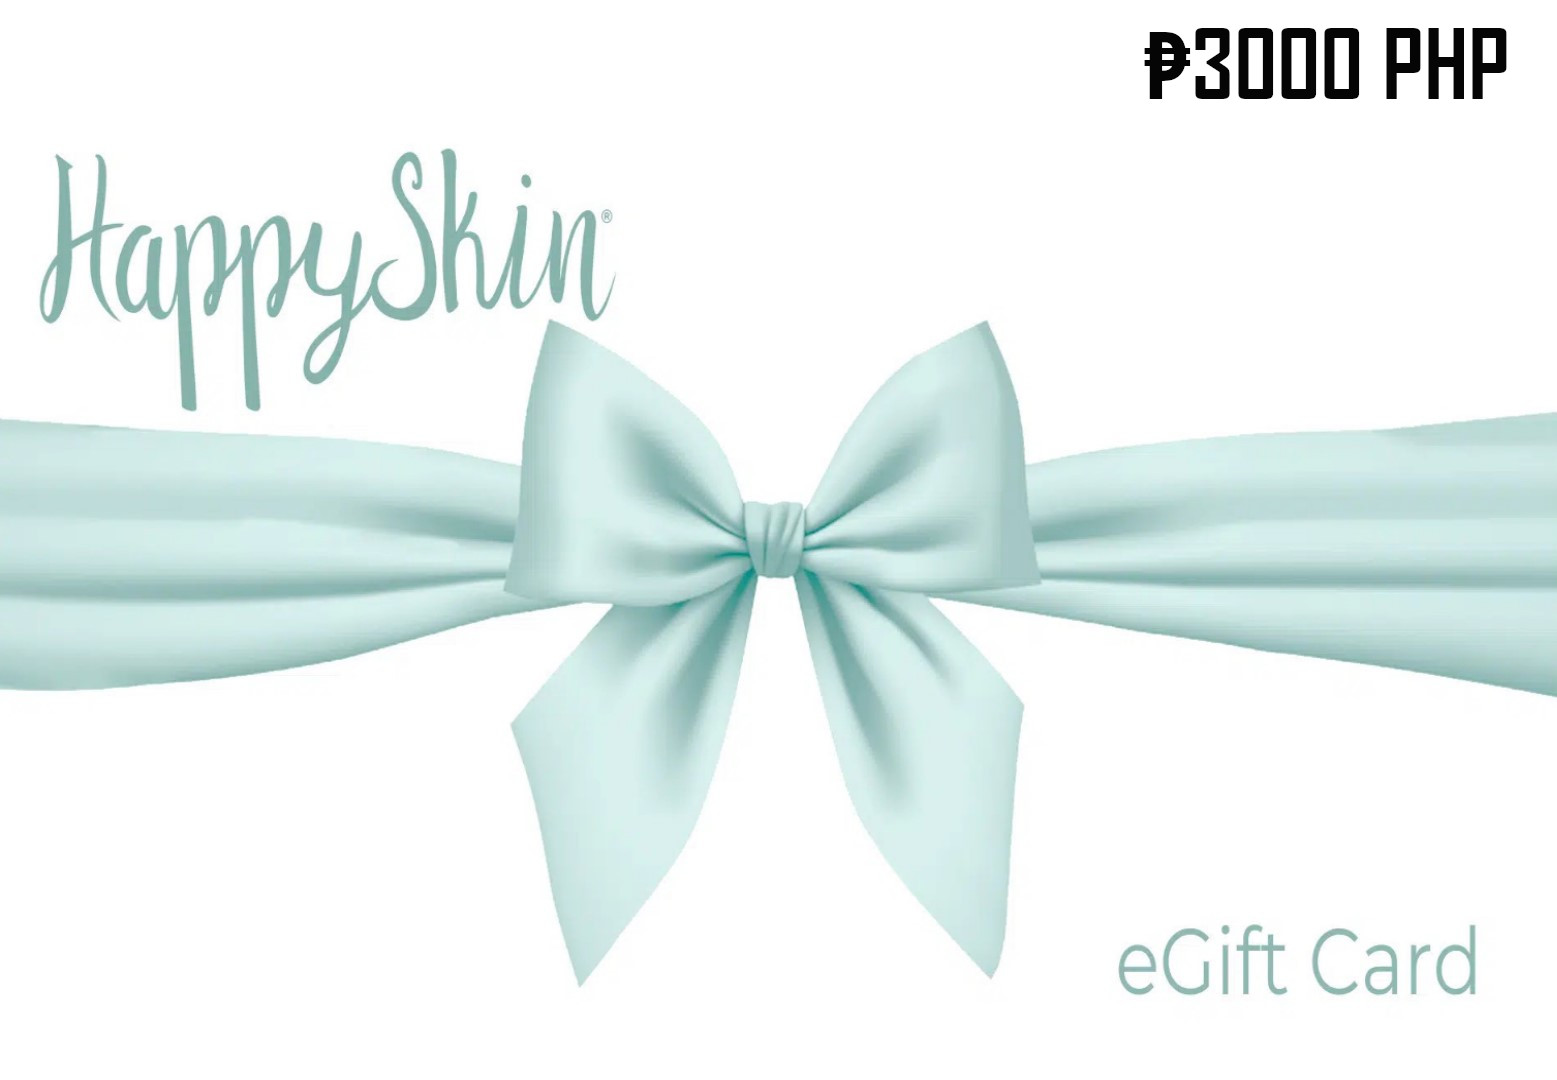 Happy Skin ₱3000 PH Gift Card